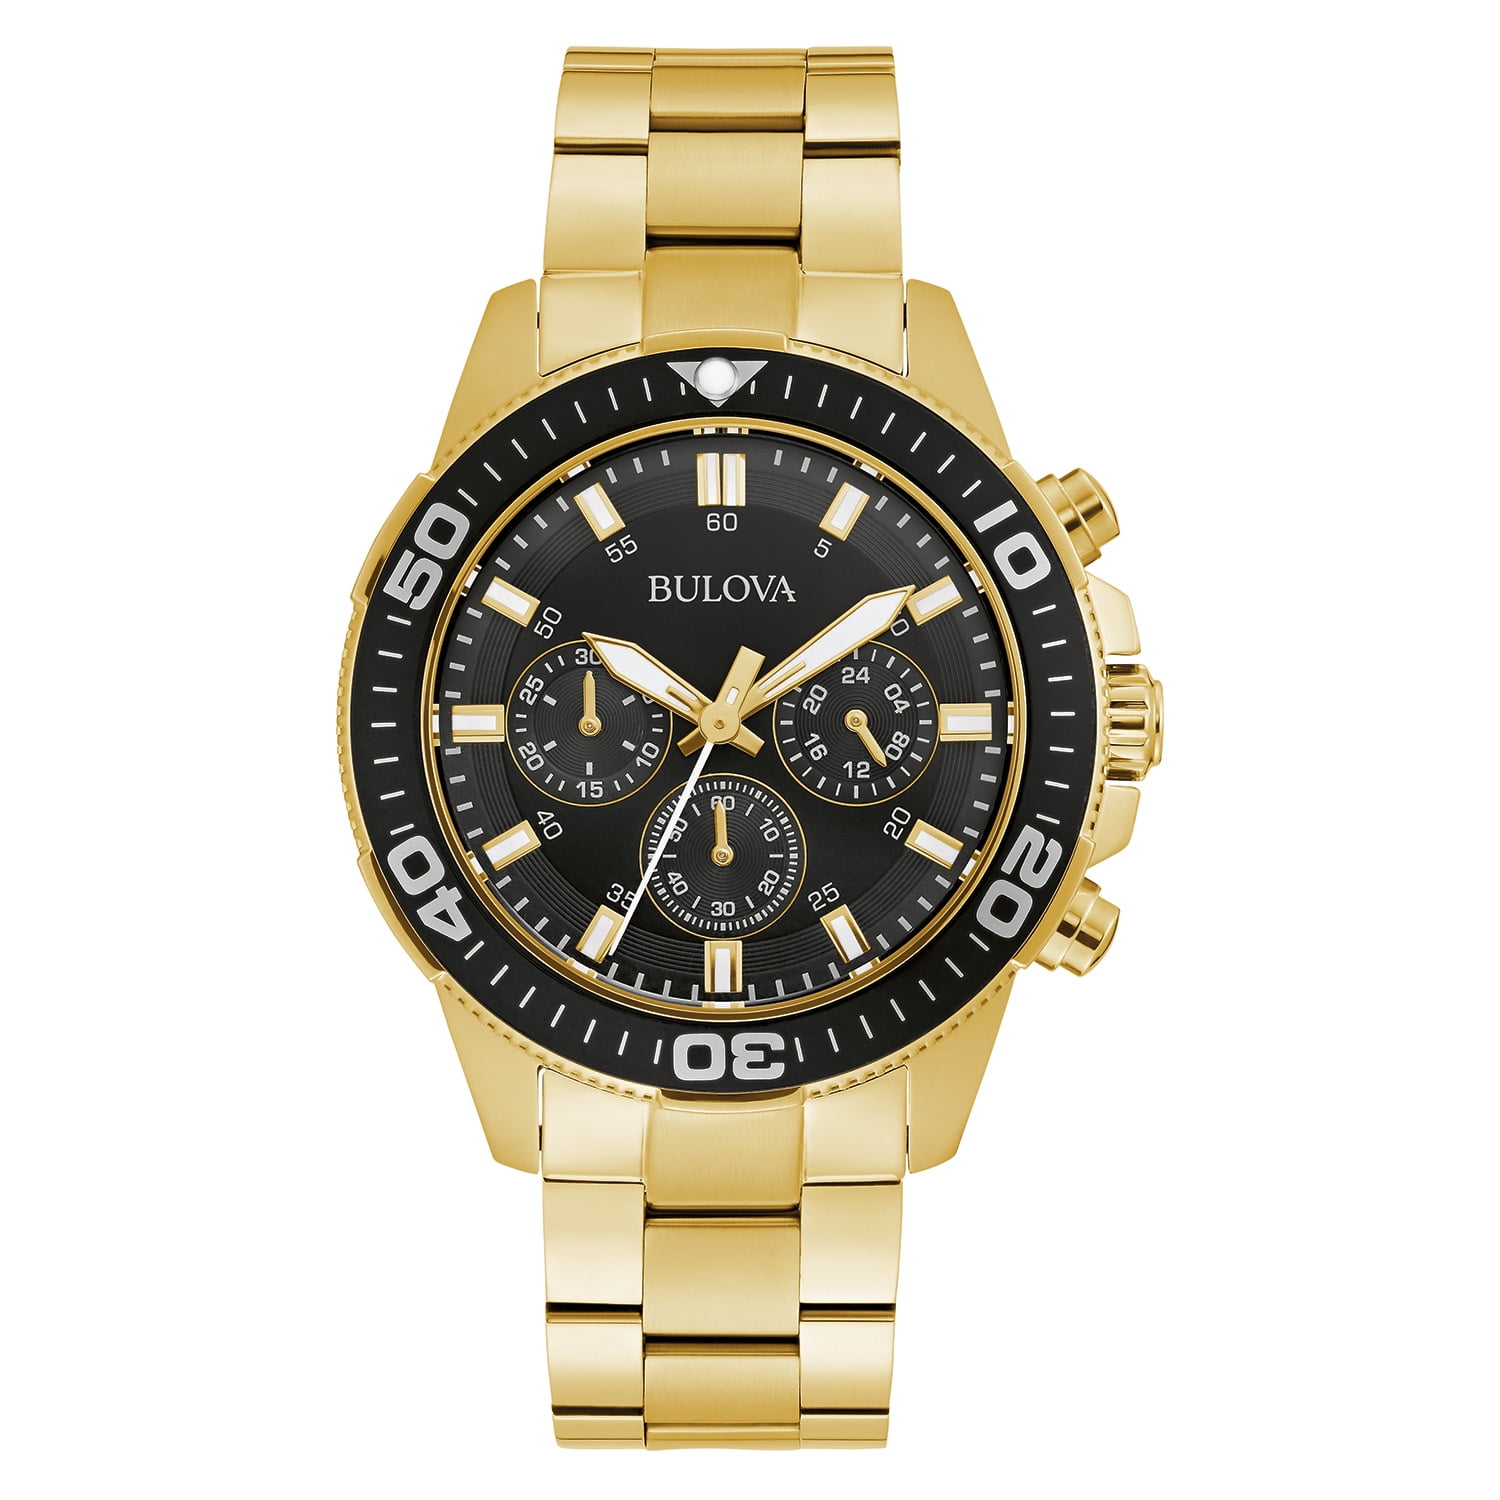 Bulova - Bulova Men's Gold-Tone Chronograph Watch 98A248 - Walmart.com ...